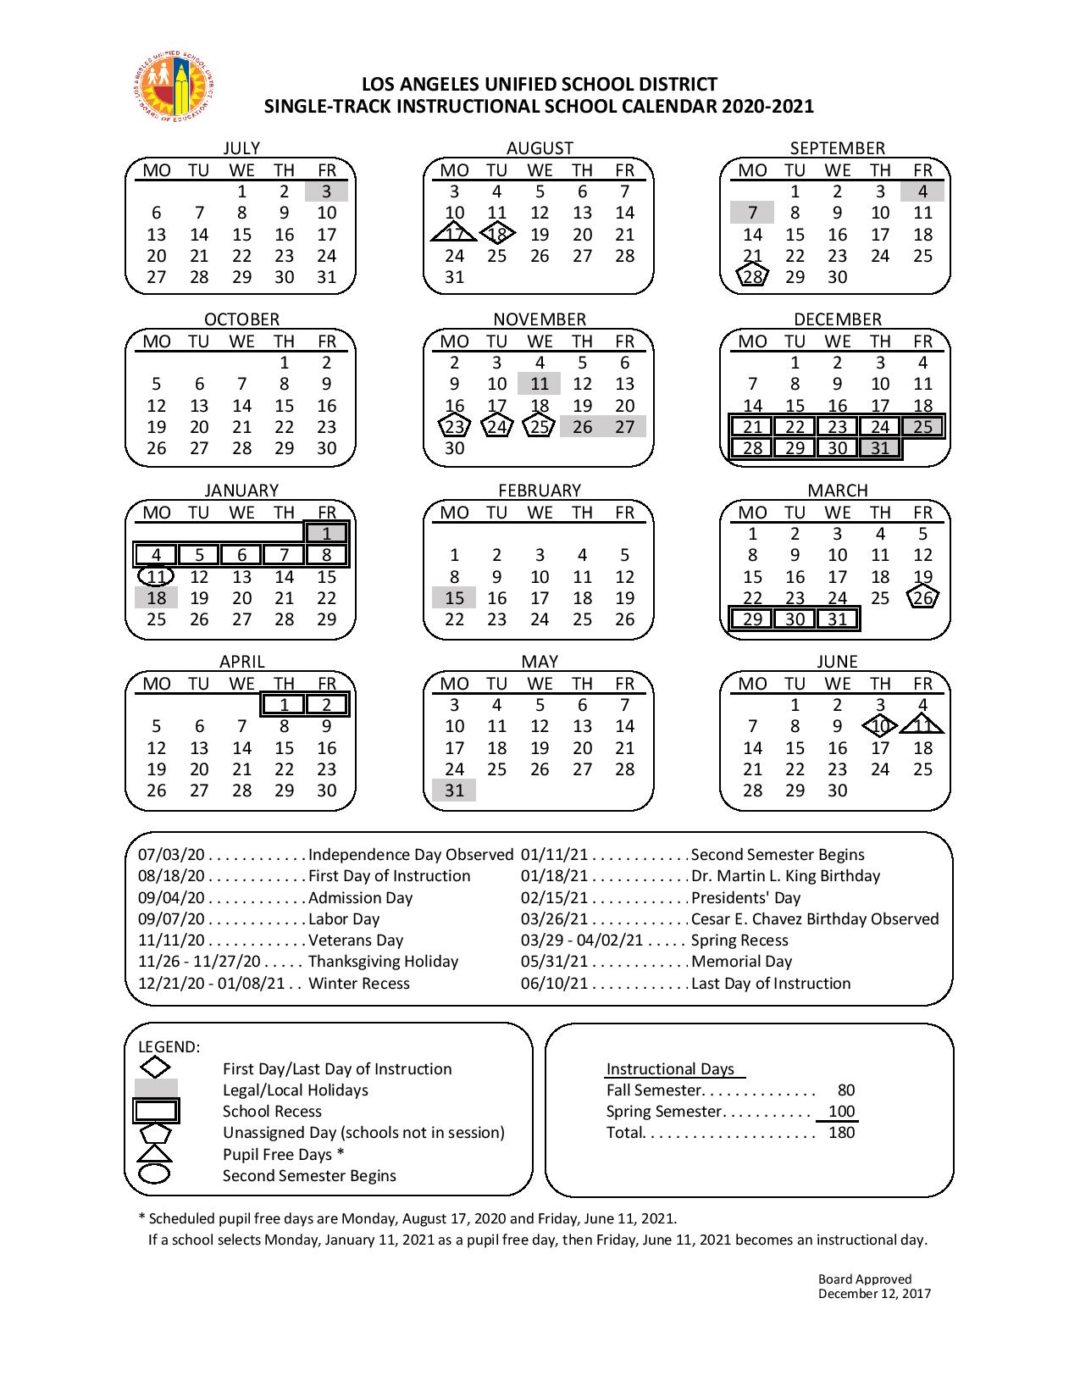 Los Angeles Unified School District Calendar 20202021